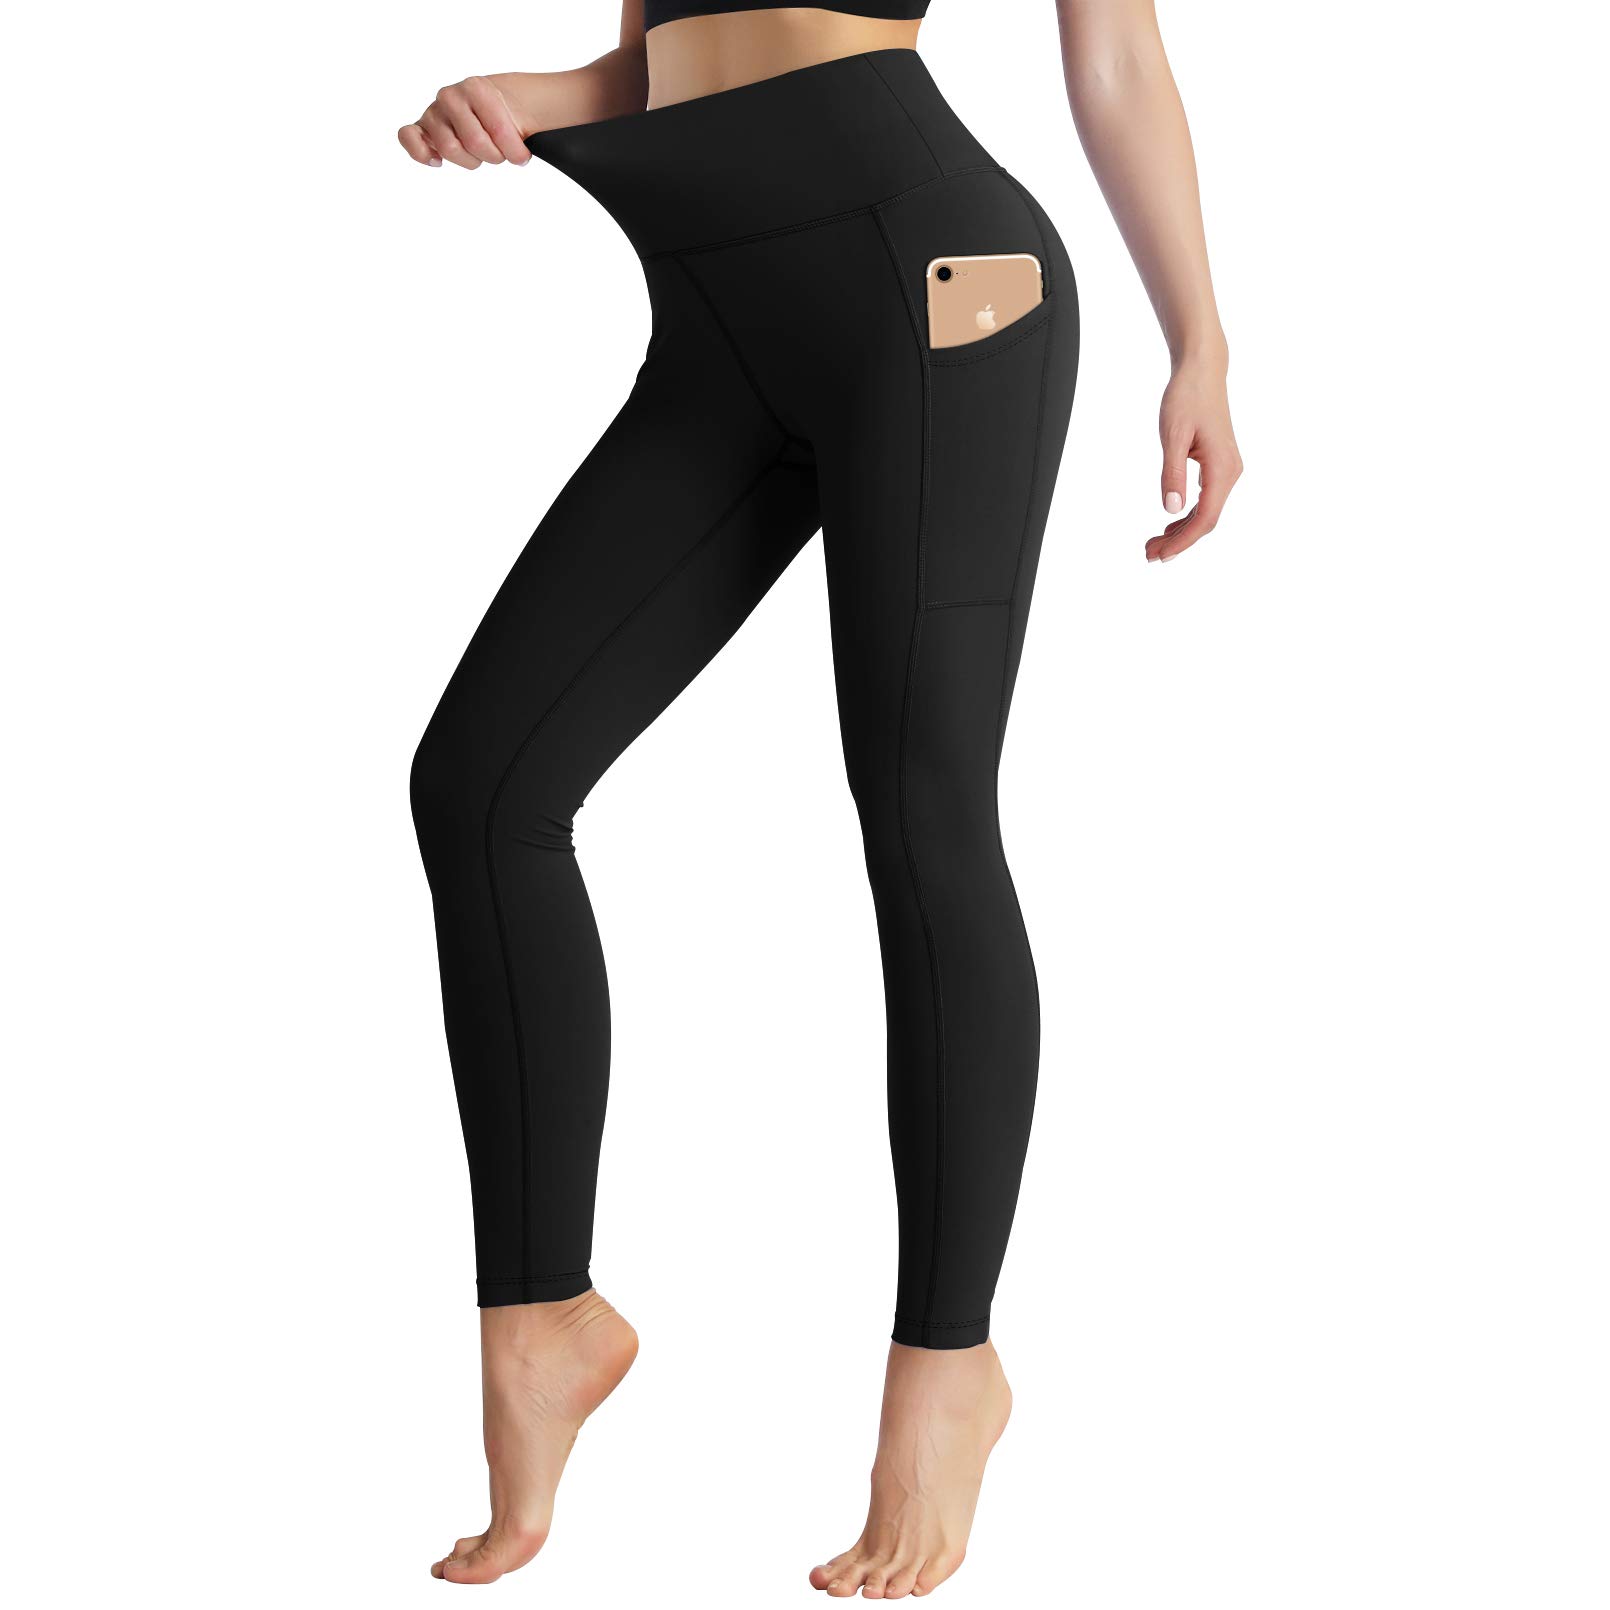 Women's 4-way stretch leggings